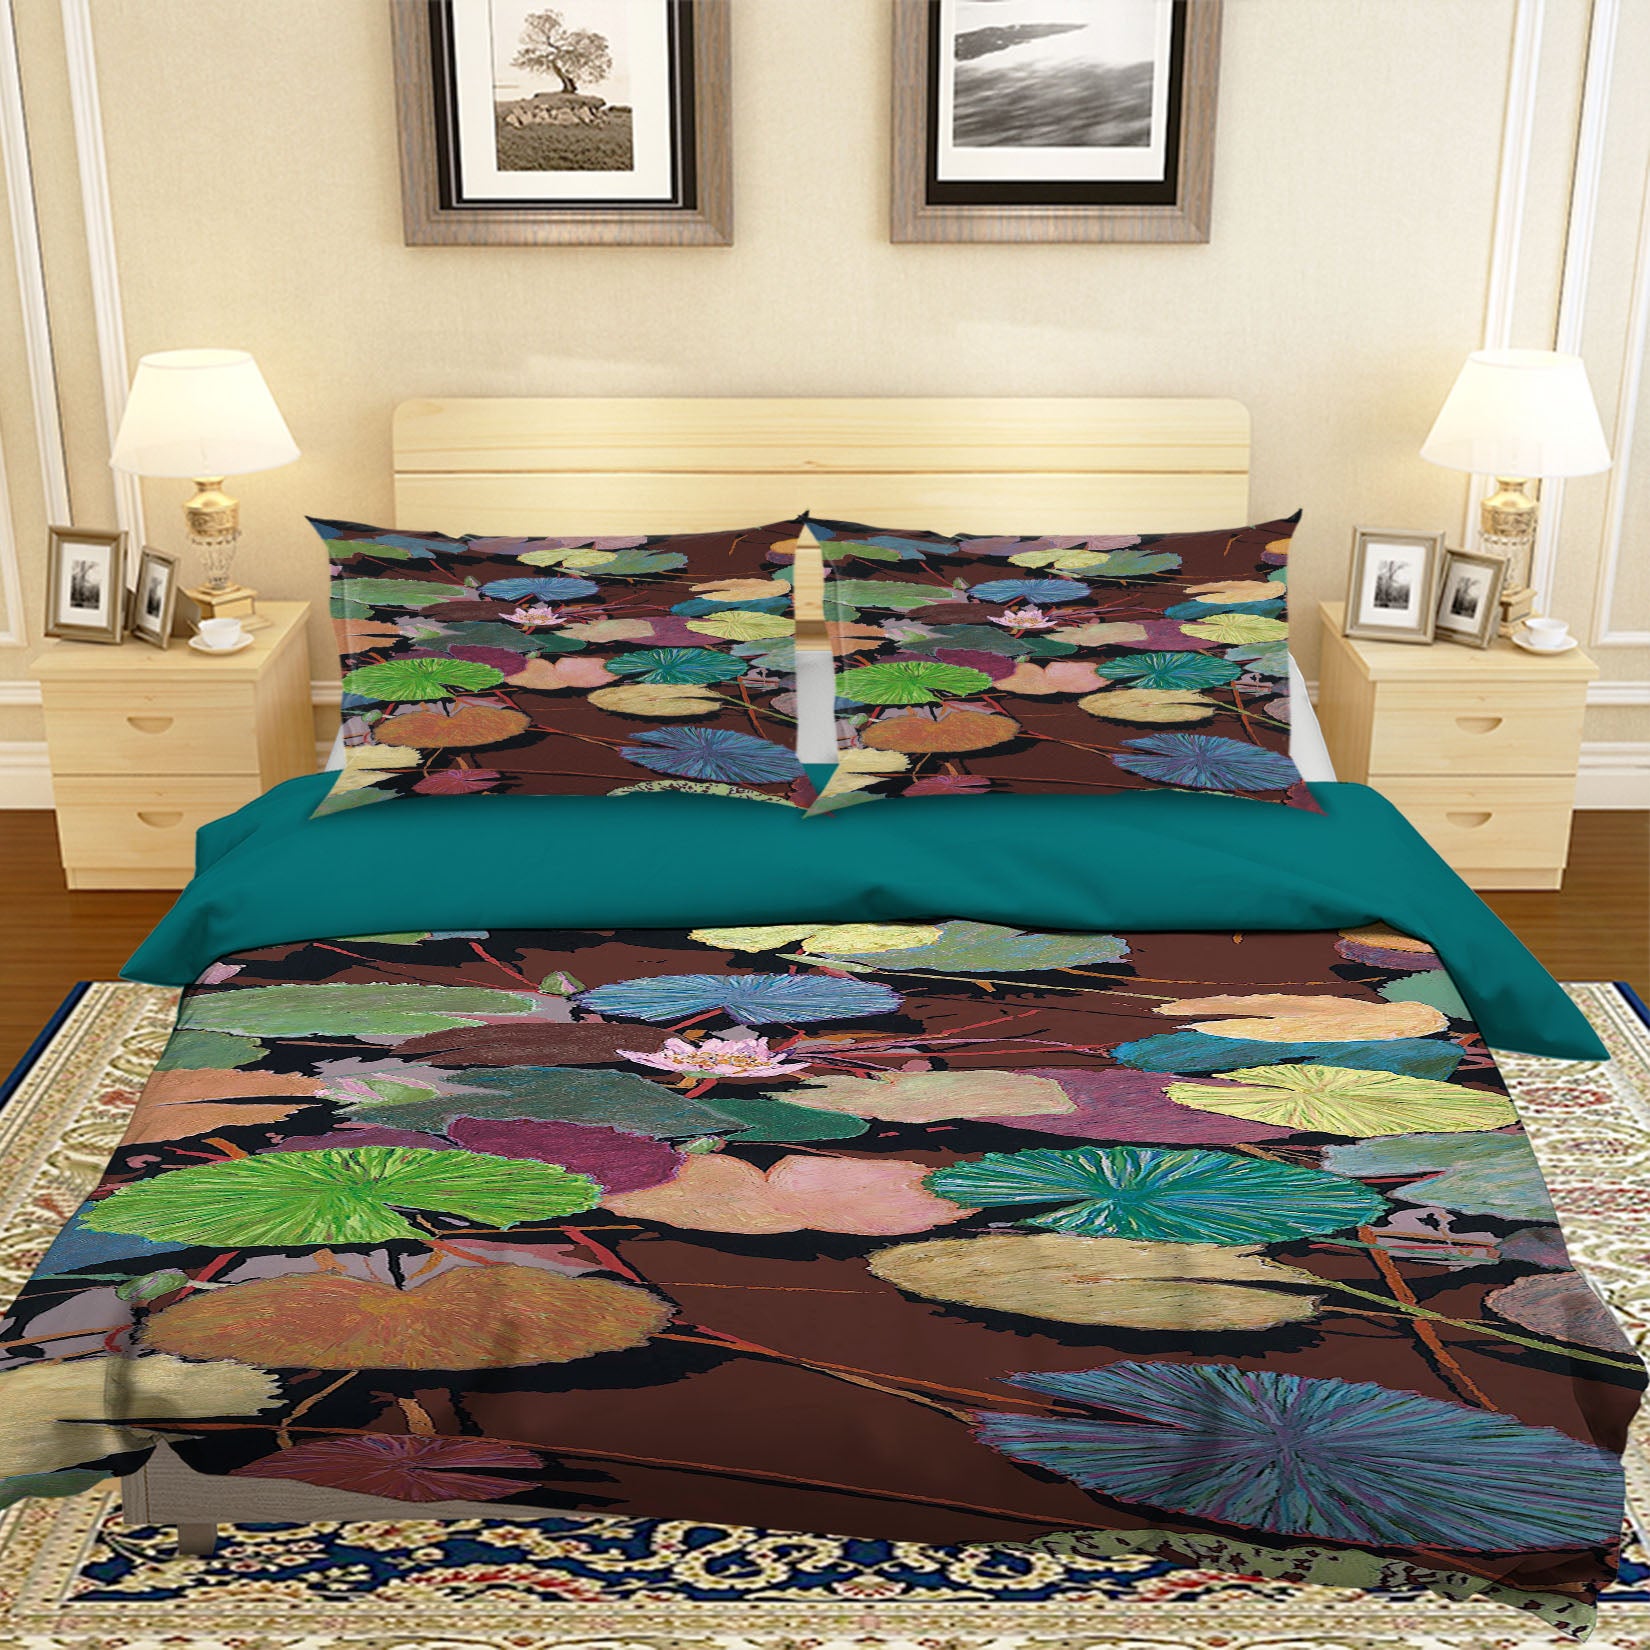 3D Muddy Waters 1170 Allan P. Friedlander Bedding Bed Pillowcases Quilt